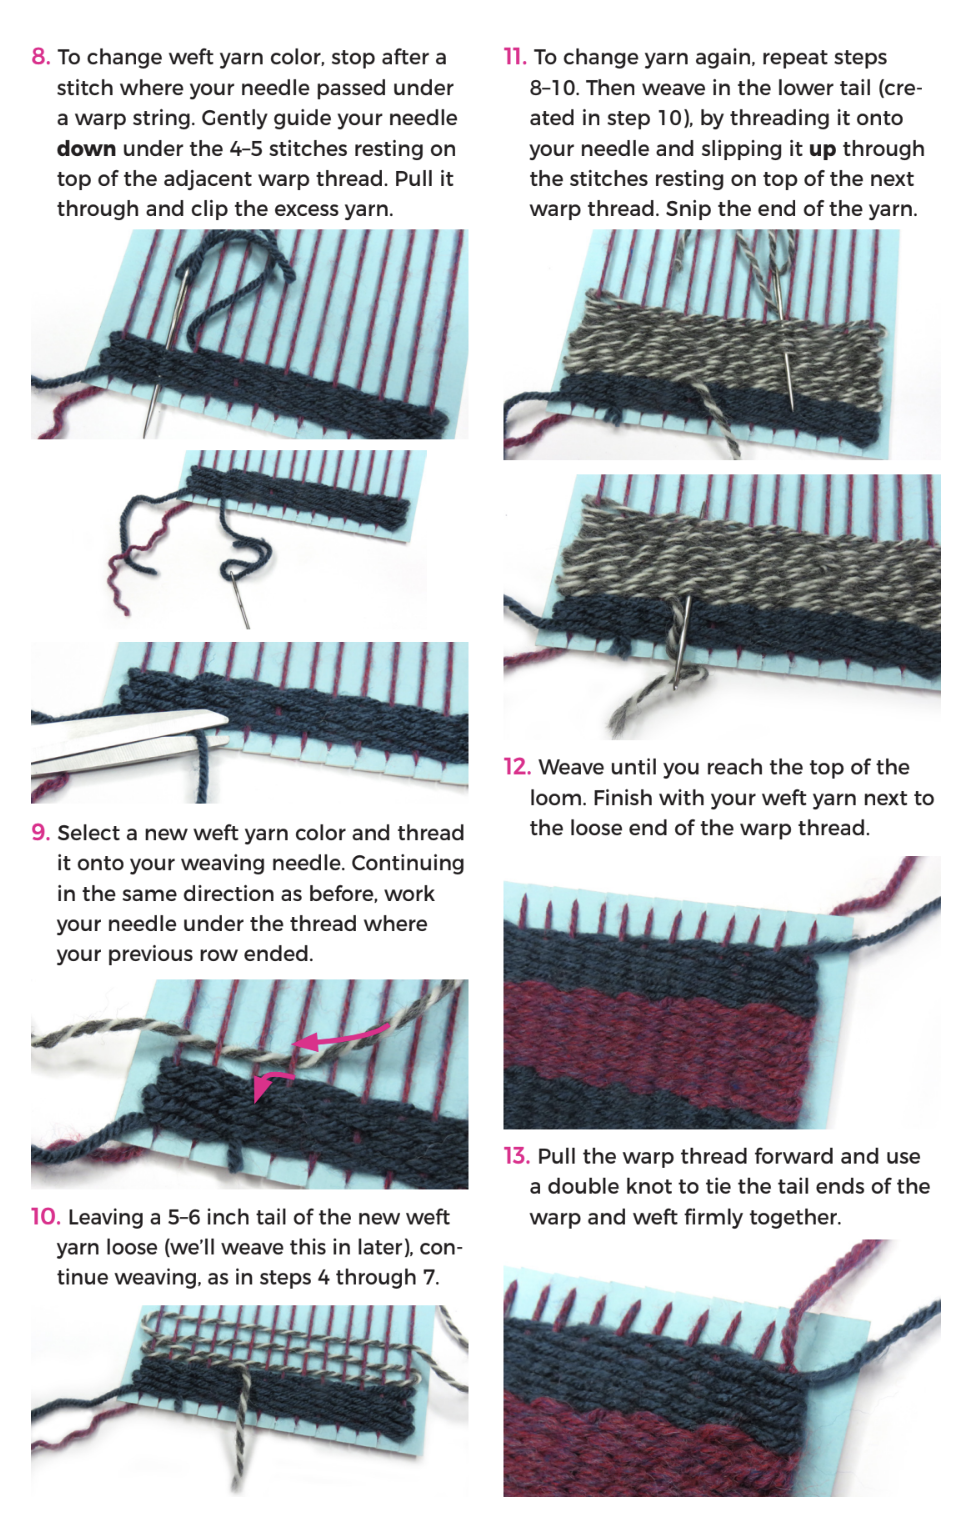 Weaving Loom Retro Kit - The Yarn Patch